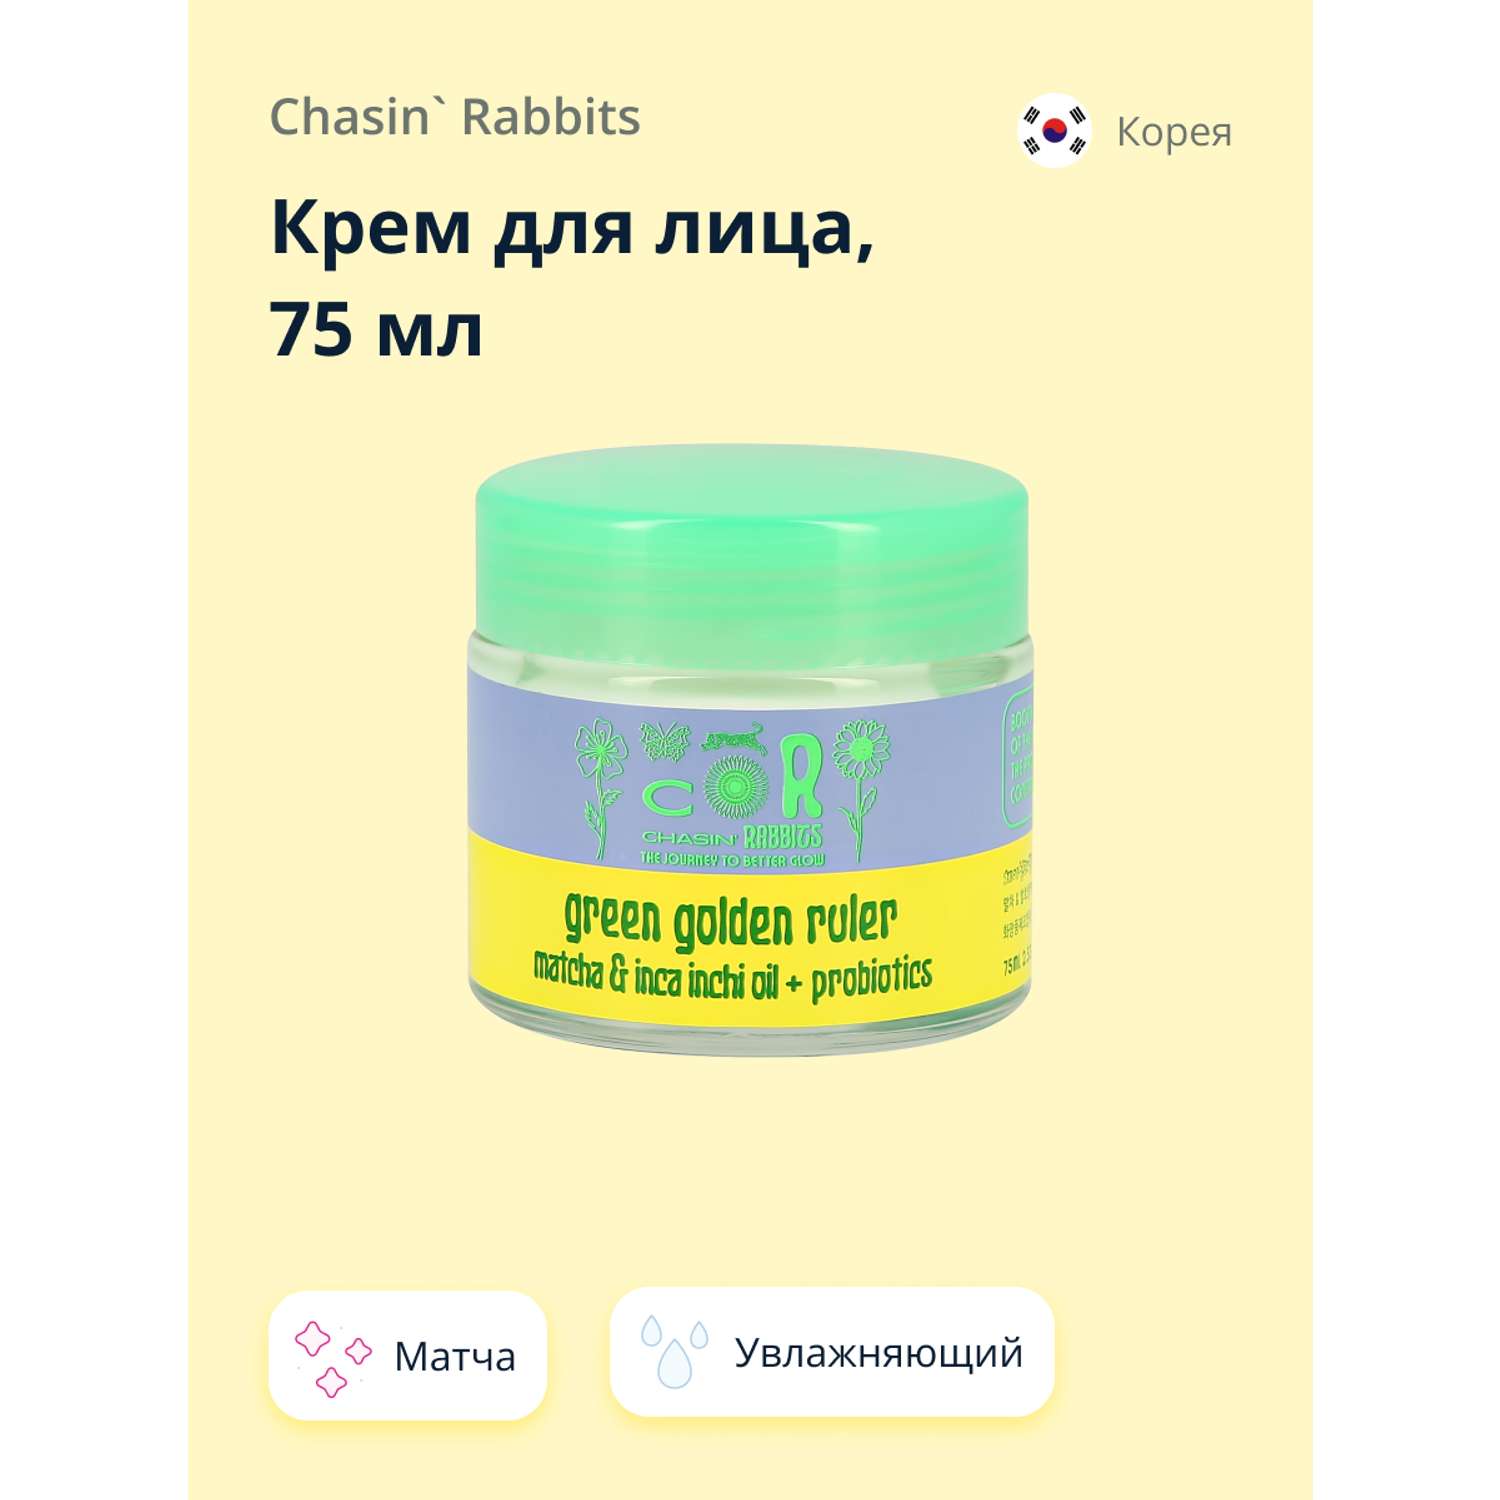 Крем для лица Chasin Rabbits с матчей увлажняющий 75 мл - фото 1